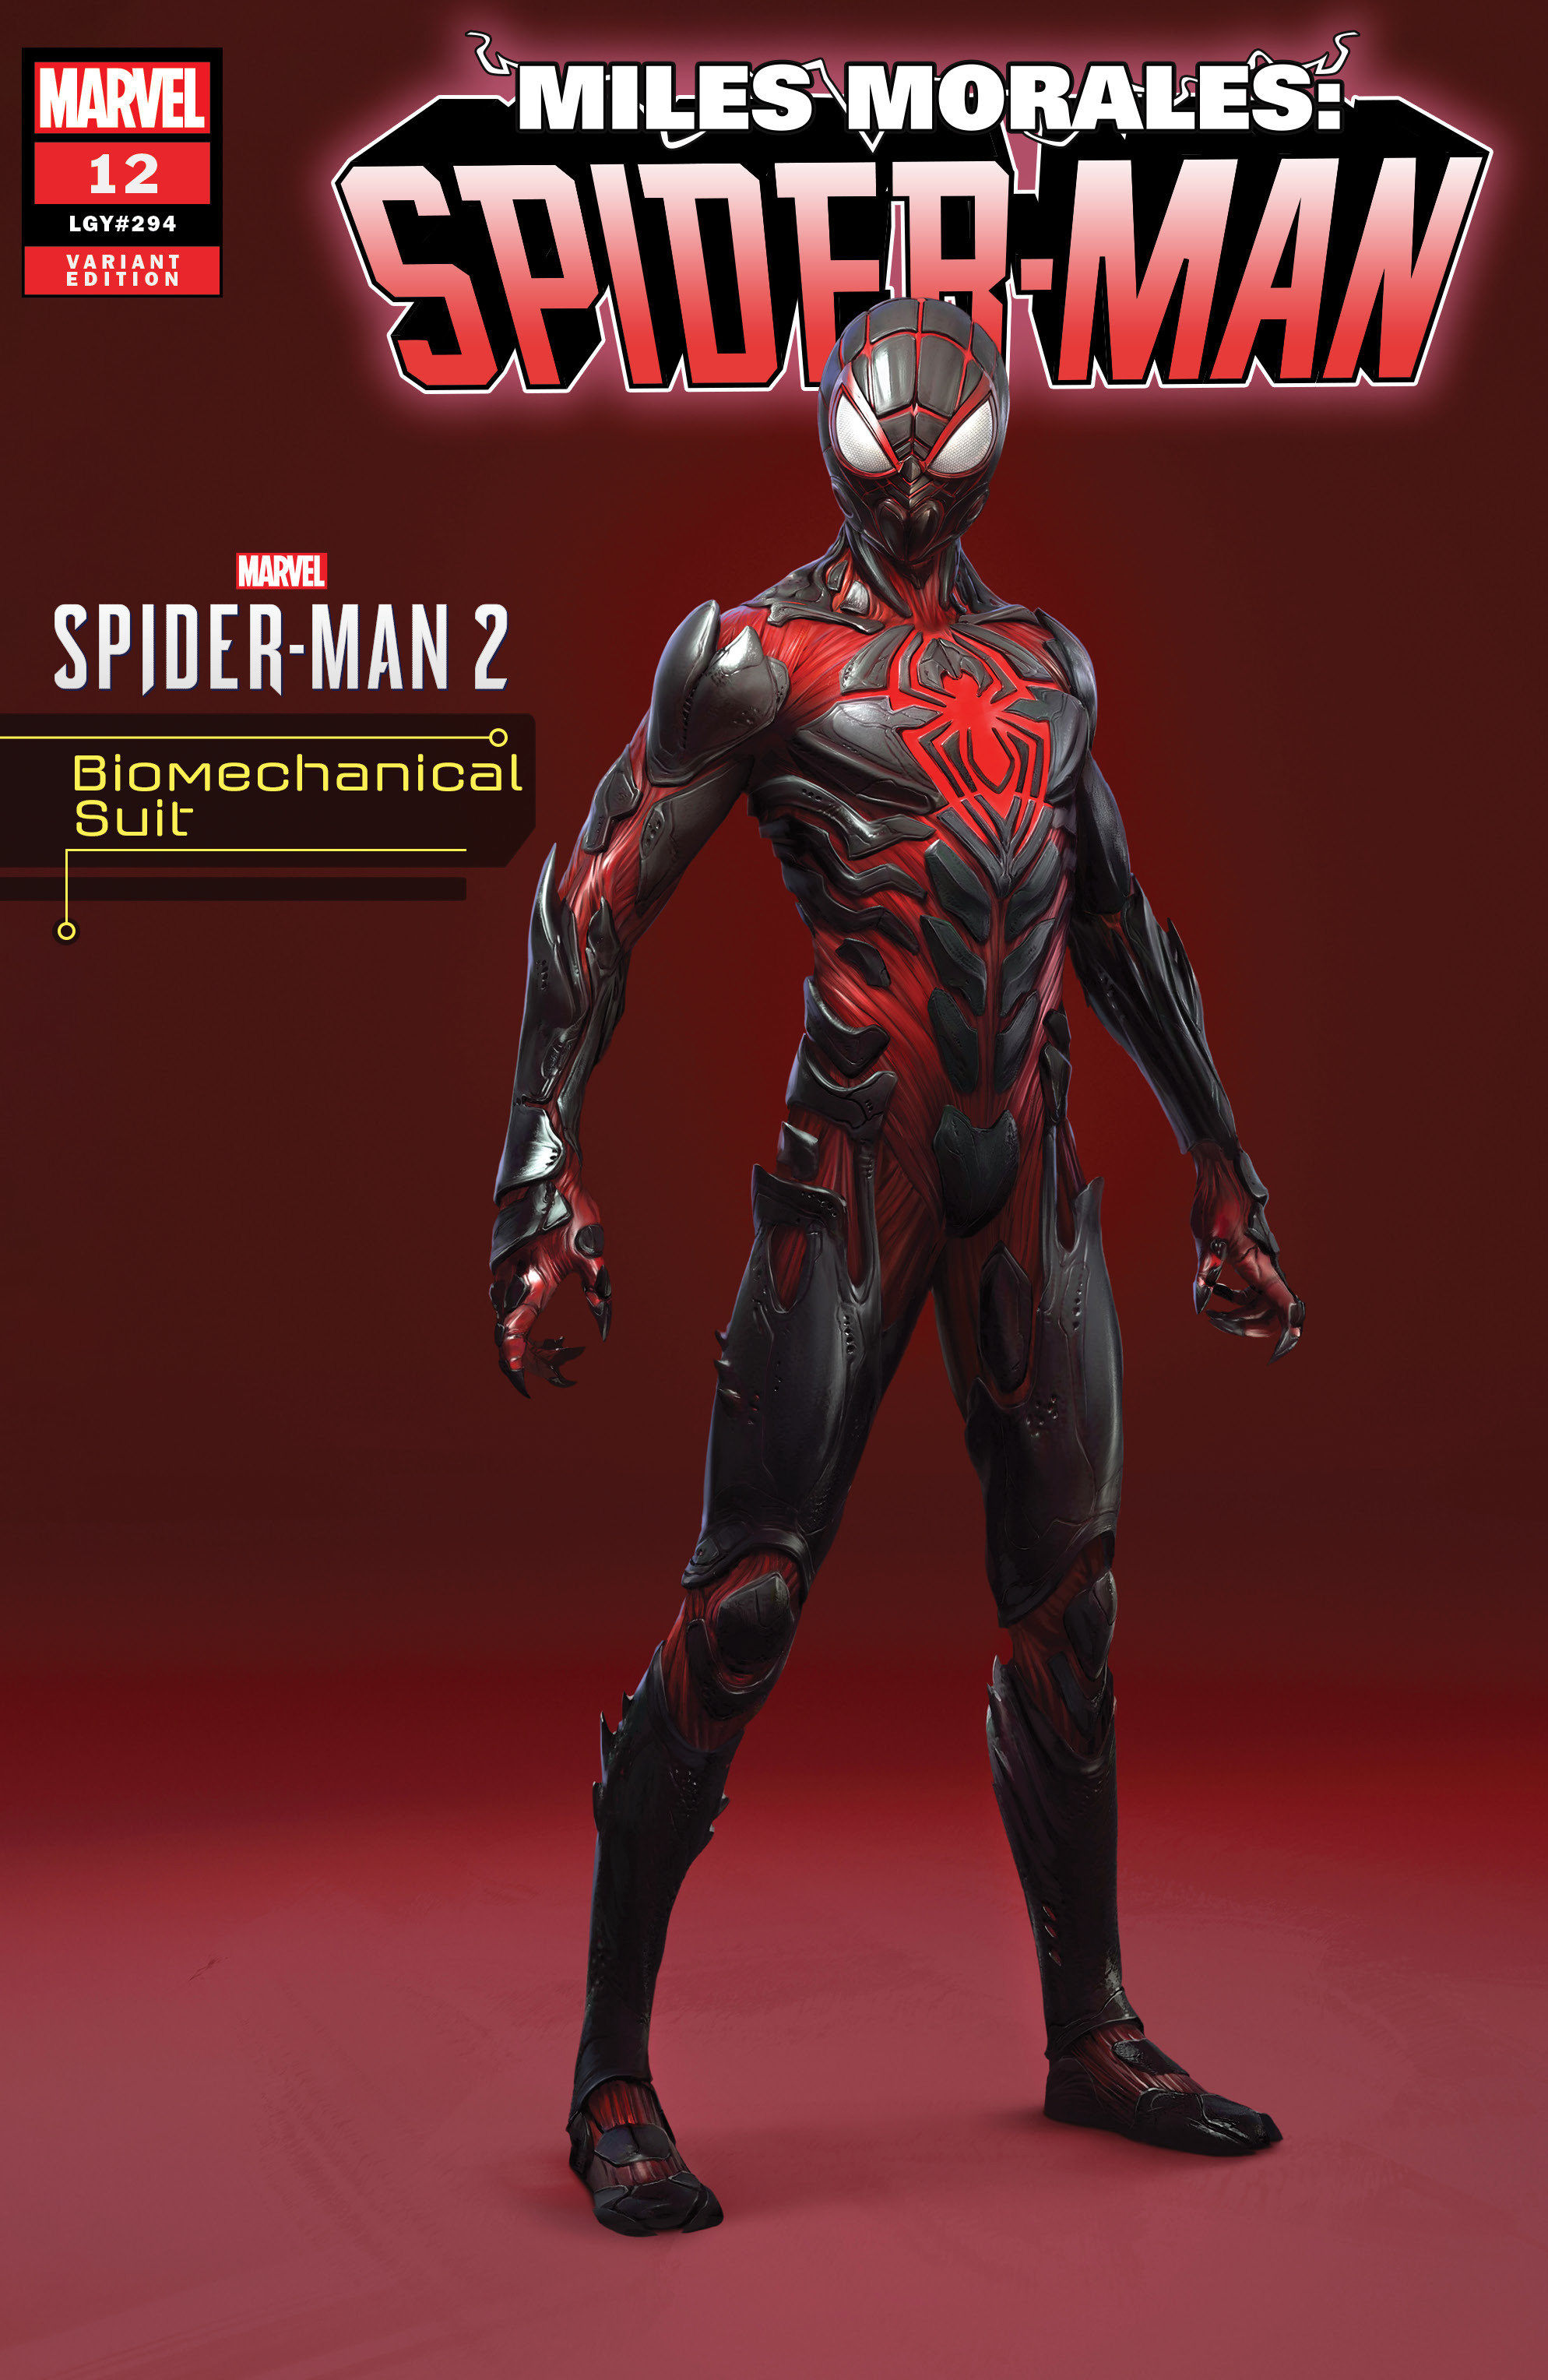 Miles Morales: Spider-Man #12 Biomechanical Suit Spider-Man 2